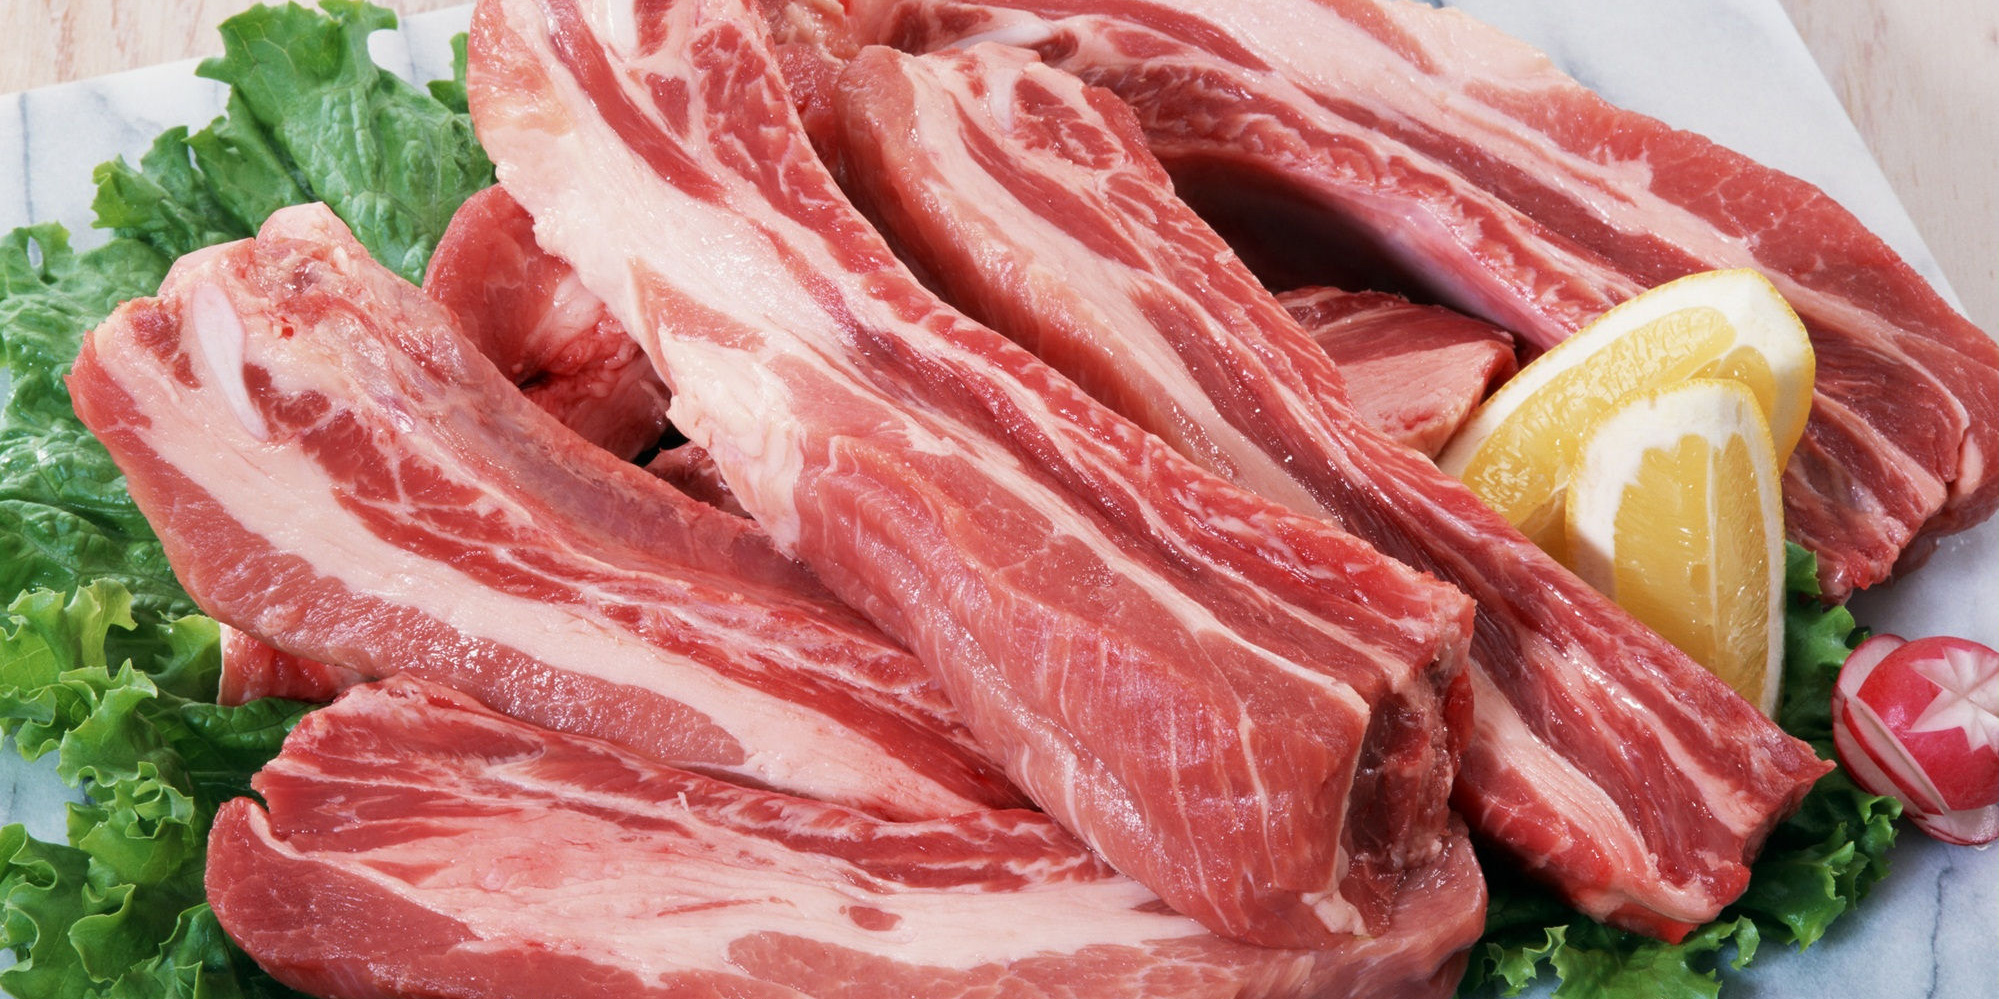 لغو ممنوعیت واردات گوشت برزیلی به چین، شیلی و مصر